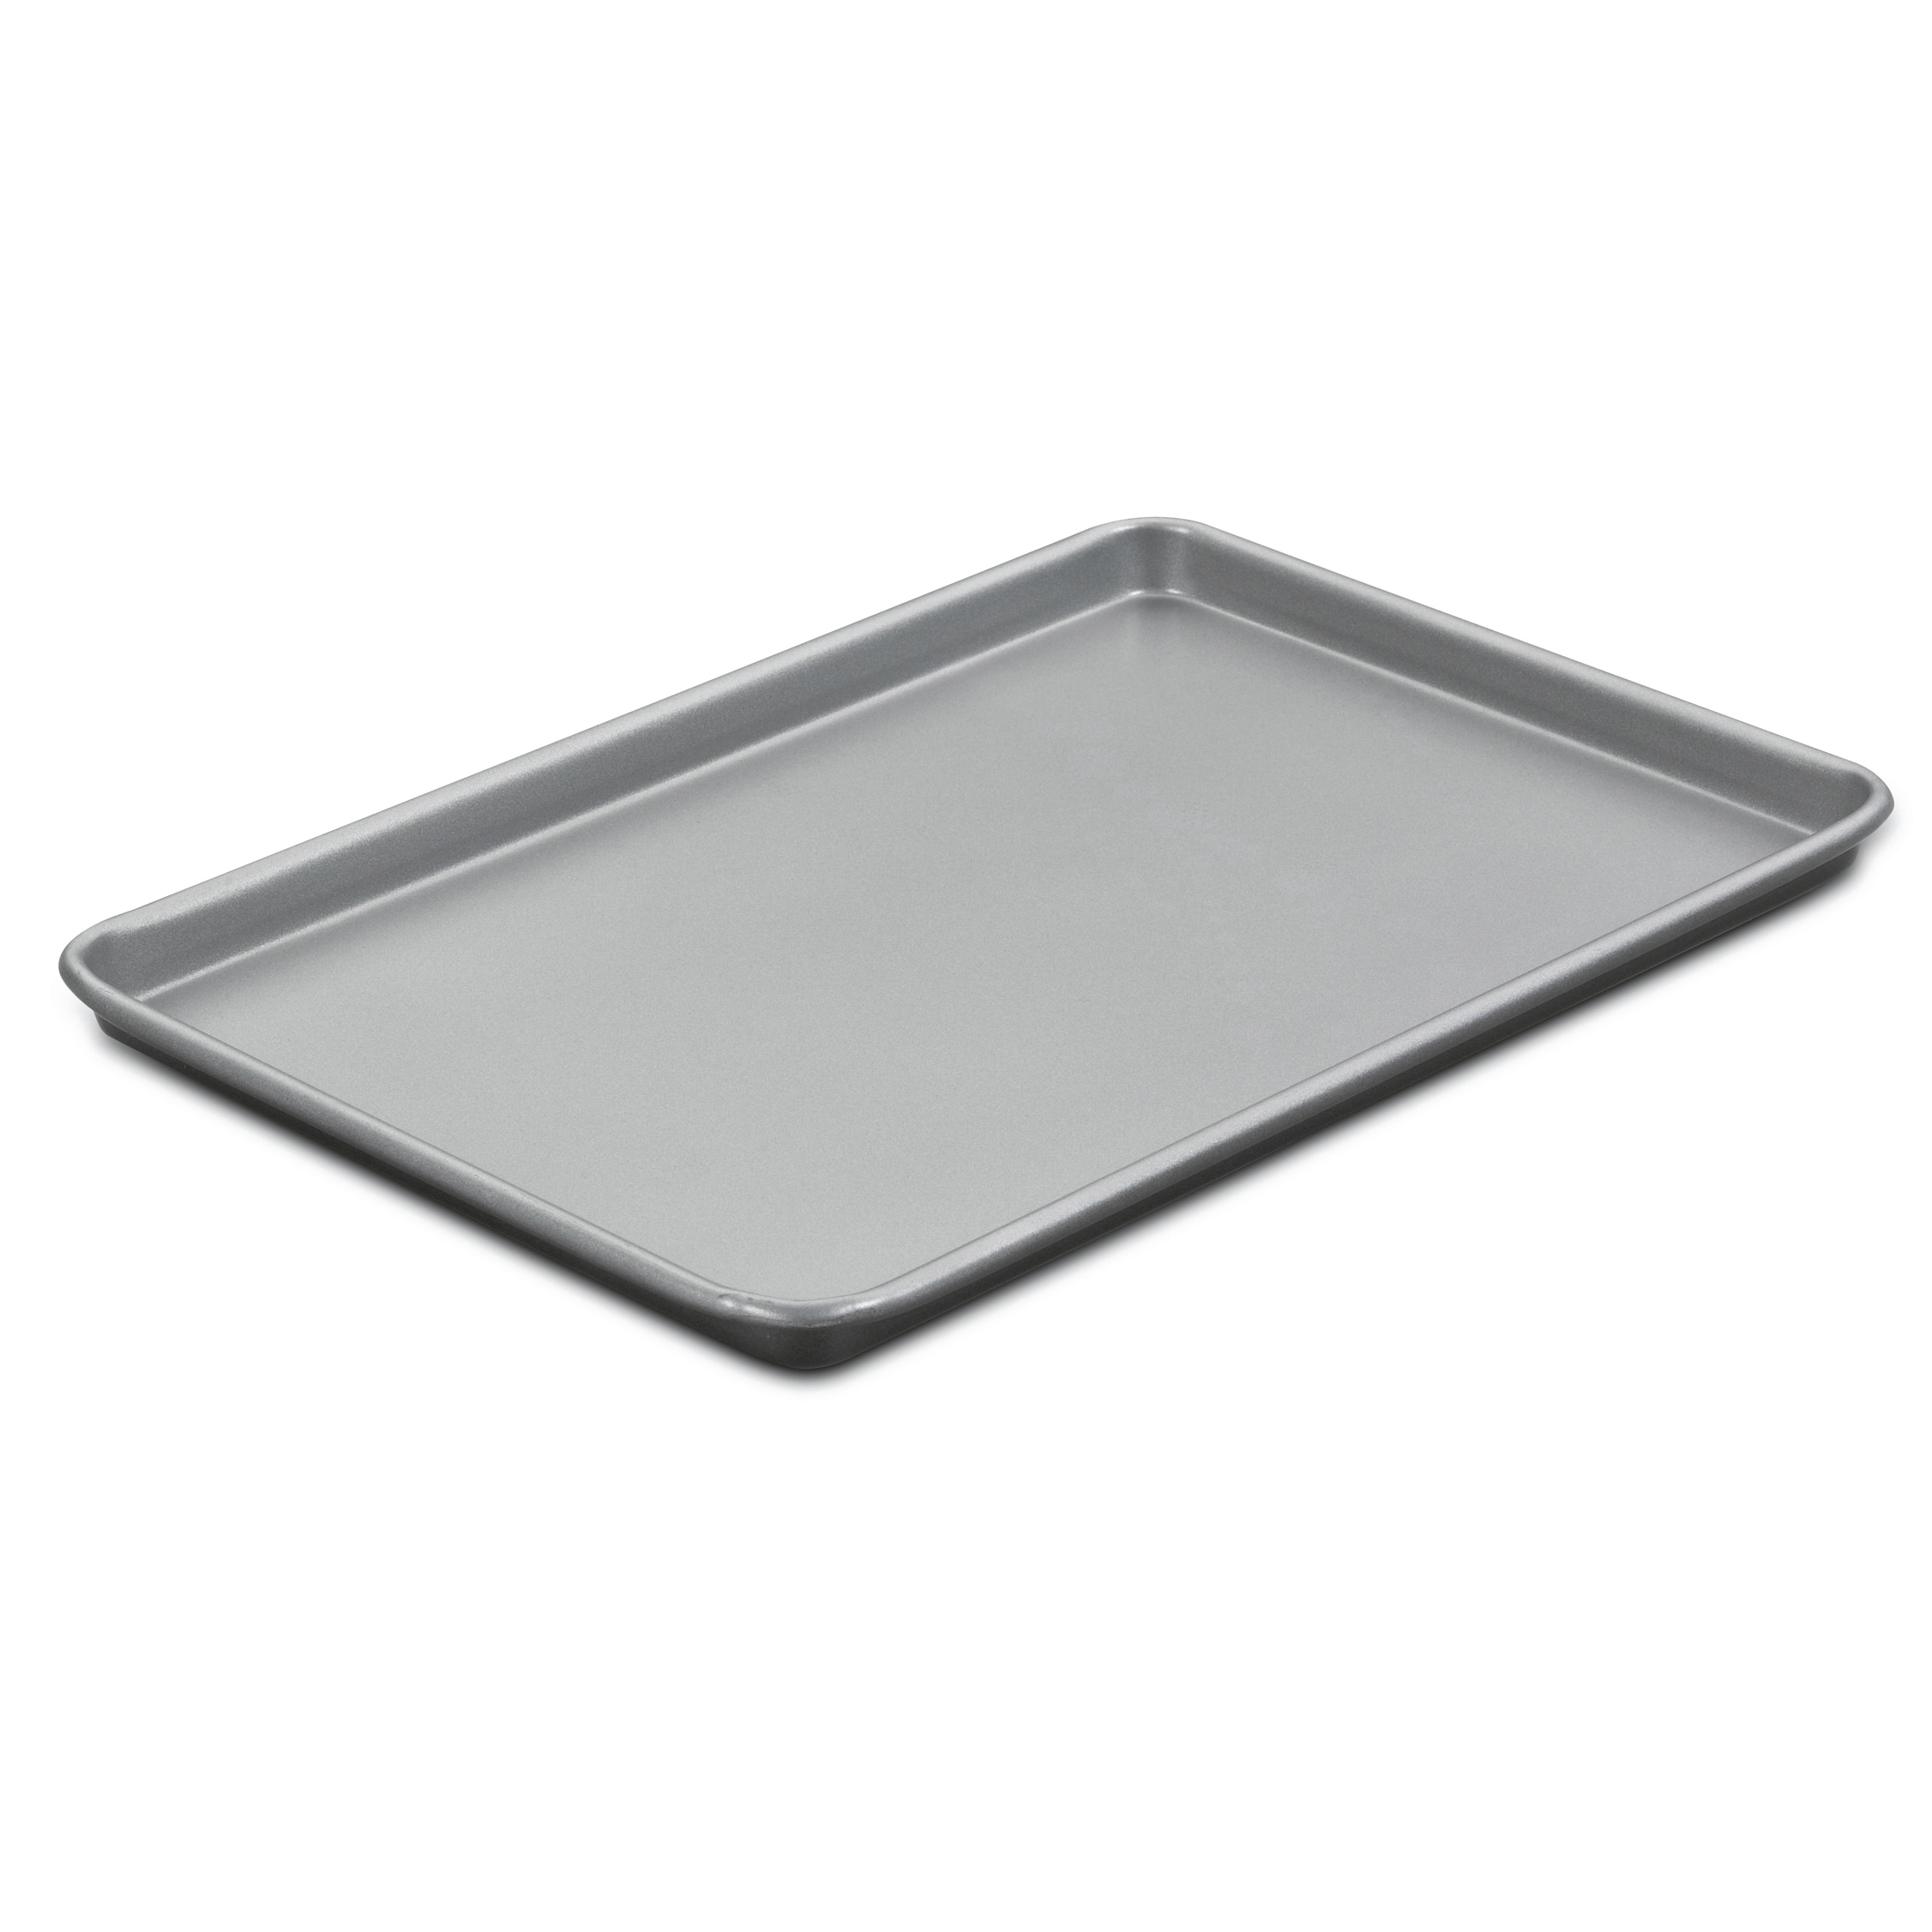 Joytable Aluminum Steel Non-Stick Baking Sheet/Cookie Sheet Set - Big Sheet Pan - 12 Piece